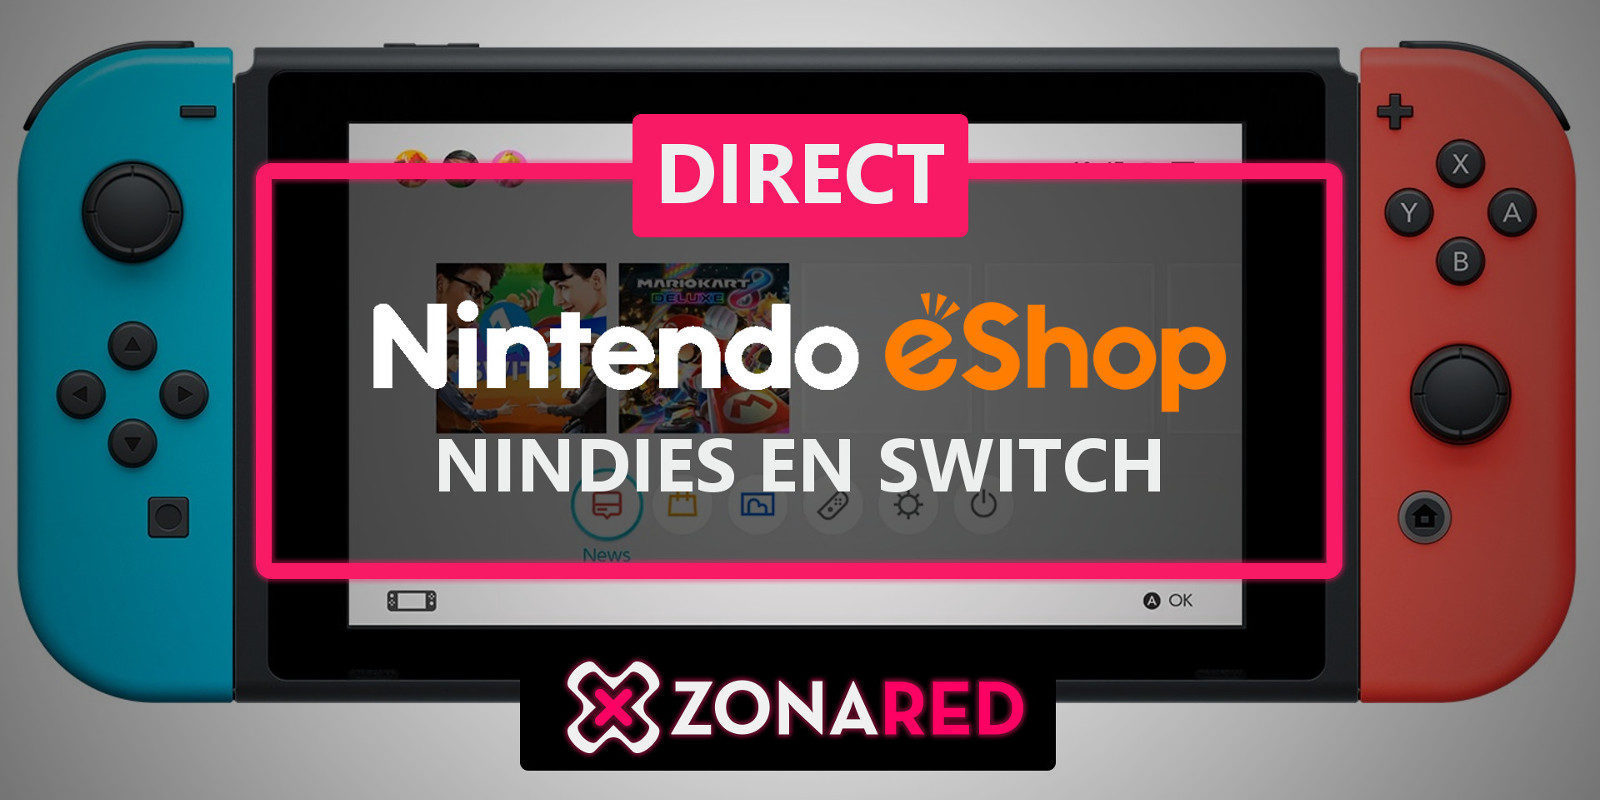 Directo: Nintendo Switch Nindies Showcase Direct